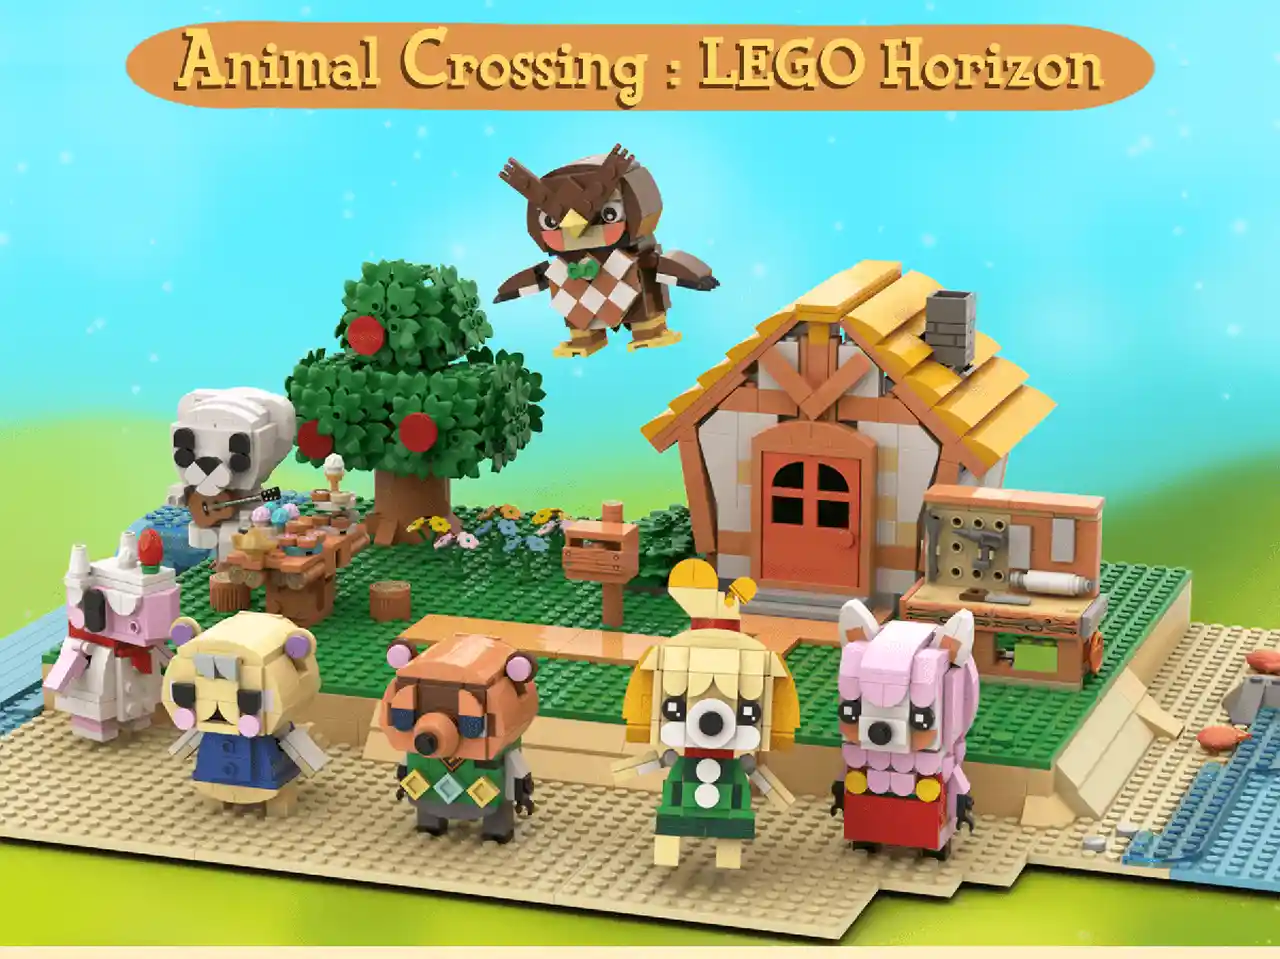 LEGO Set di Animal Crossing in arrivo secondo diversi leak